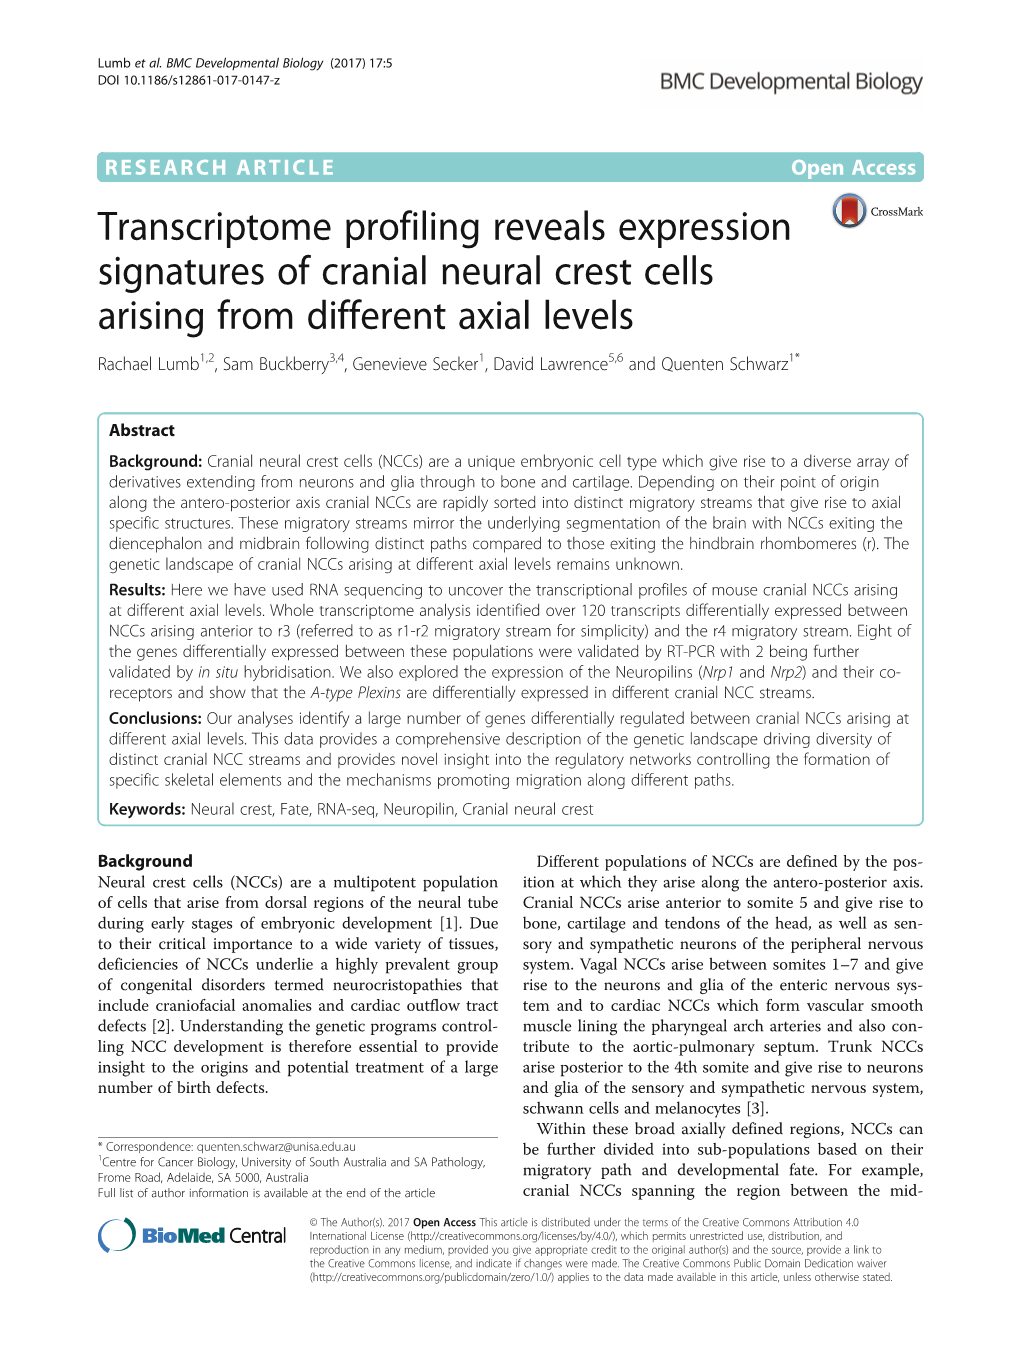 Transcriptome Profiling Reveals Expression Signatures of Cranial